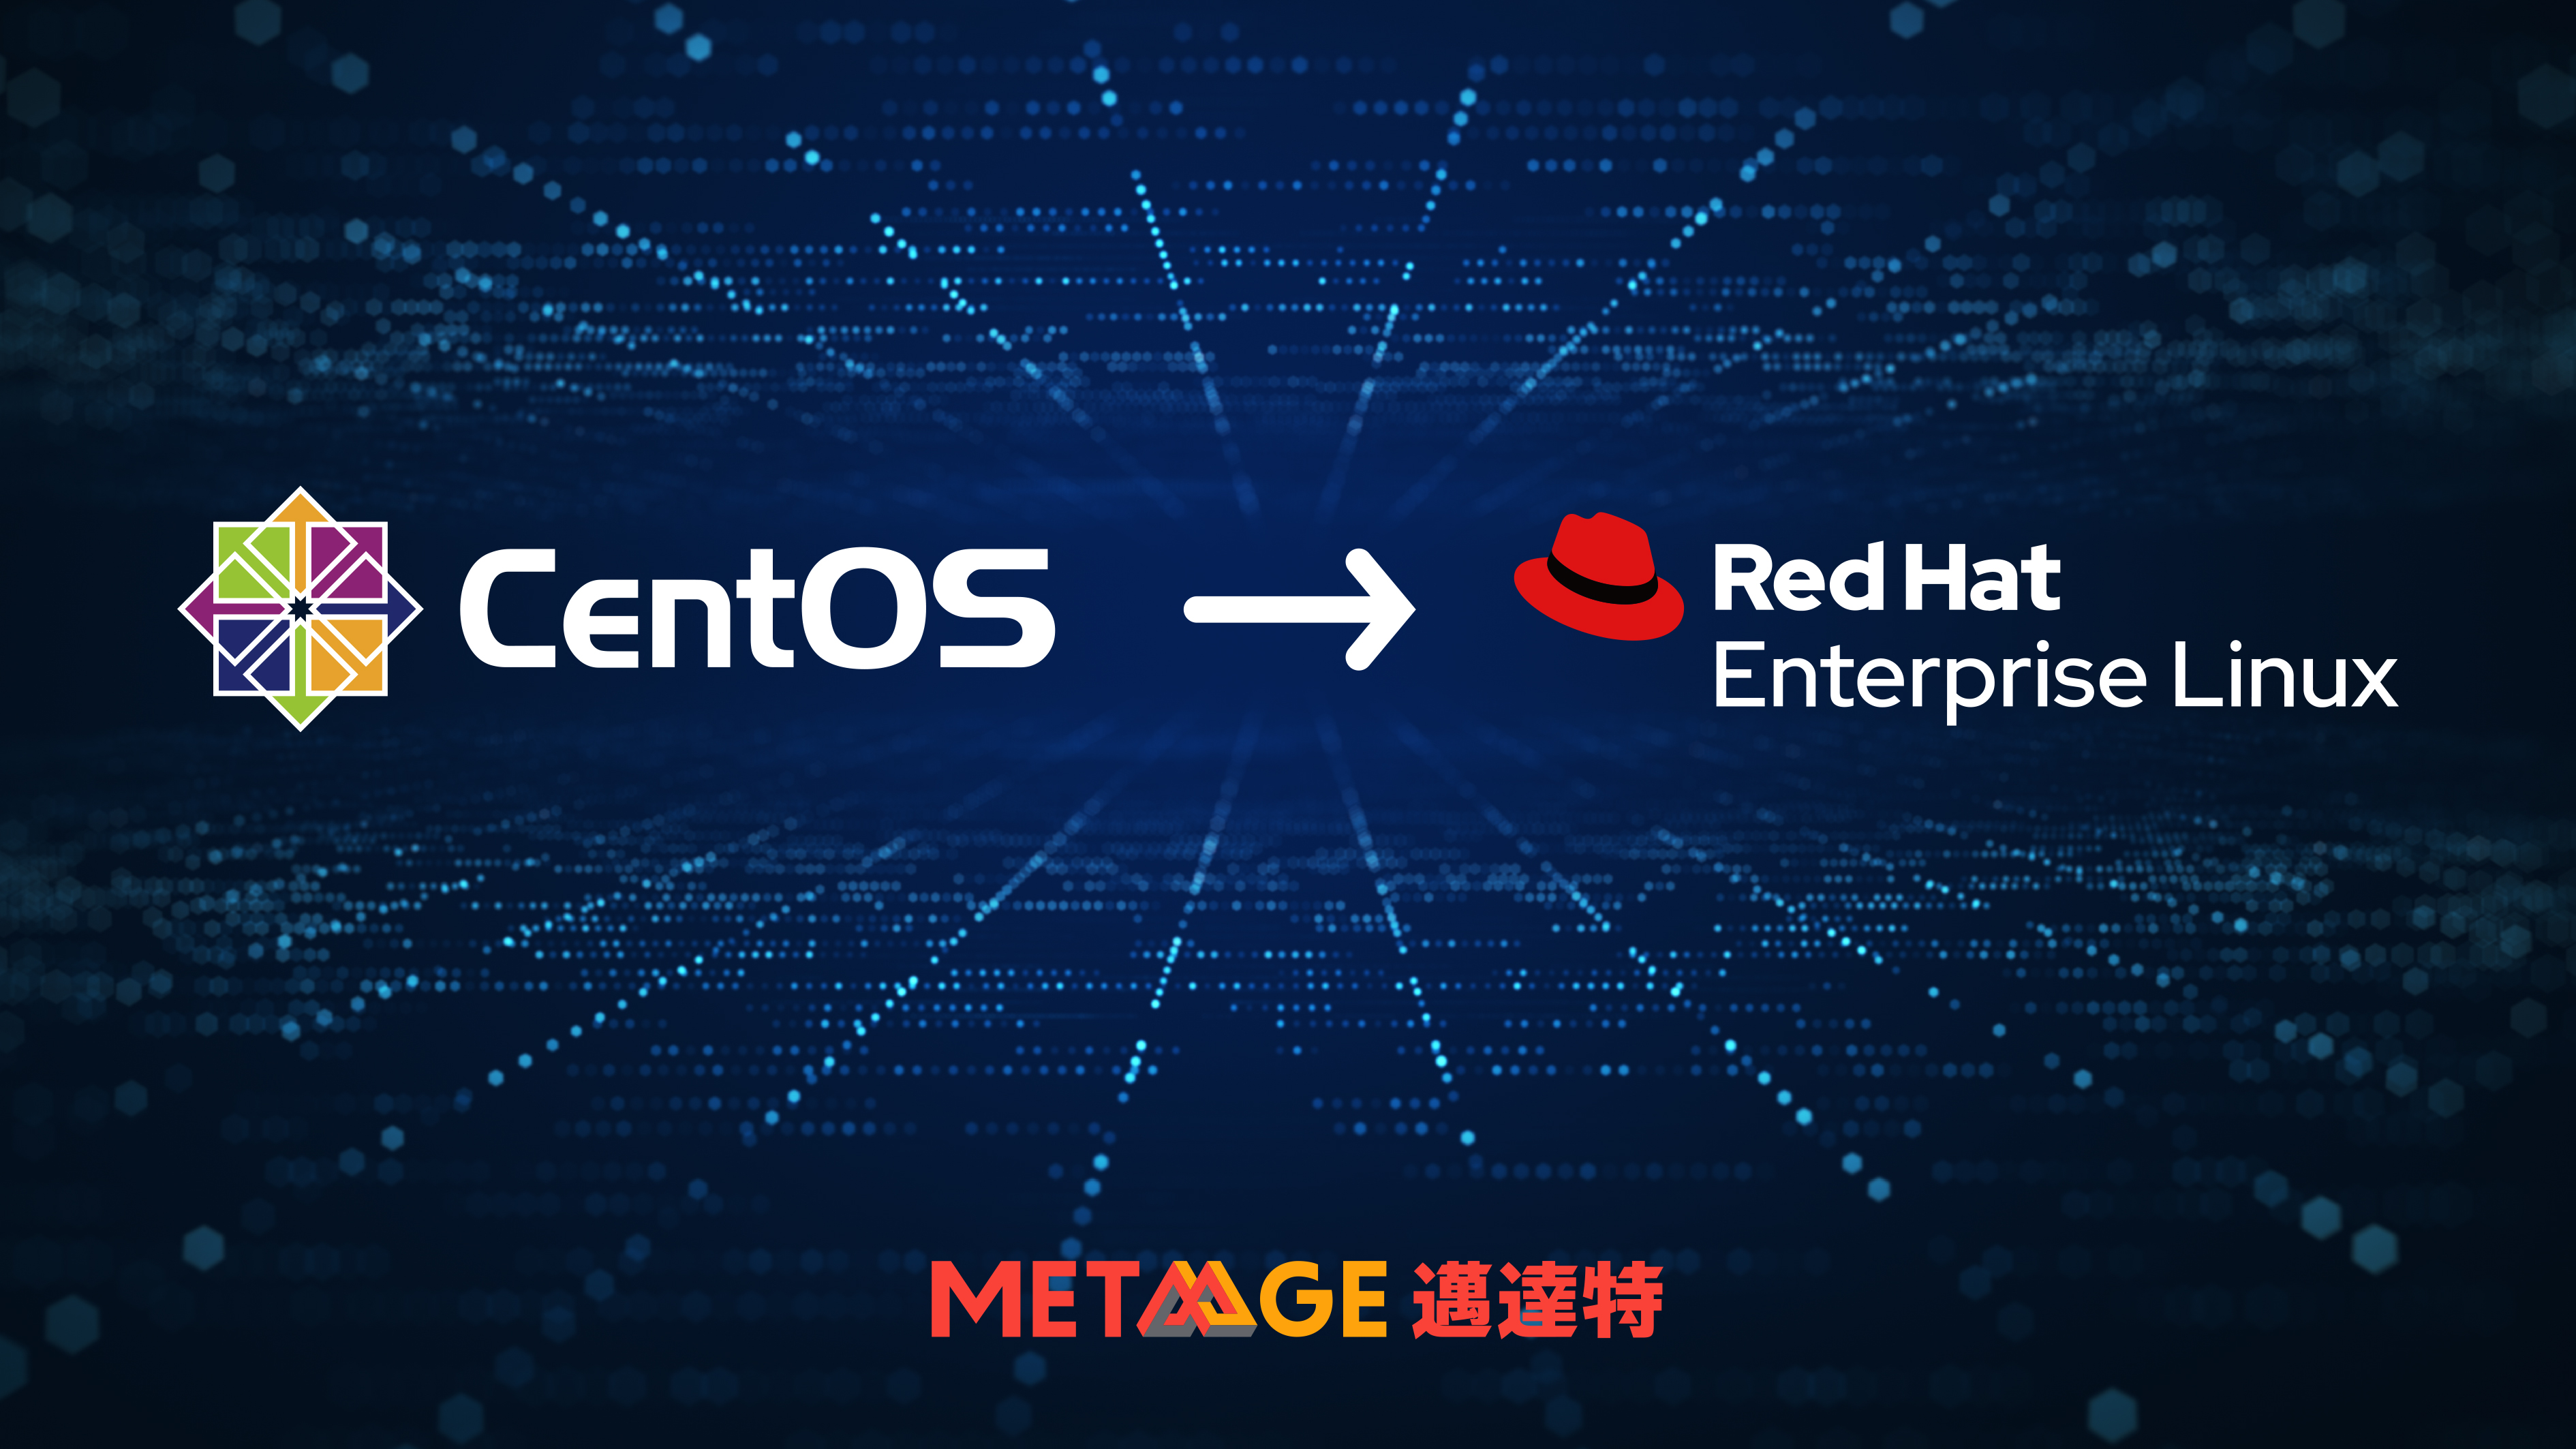 CentOS退役，用戶該何去何從？MetaAge邁達特可協助企業轉往Red Hat Enterprise Linux，打造安全穩健的IT環境。